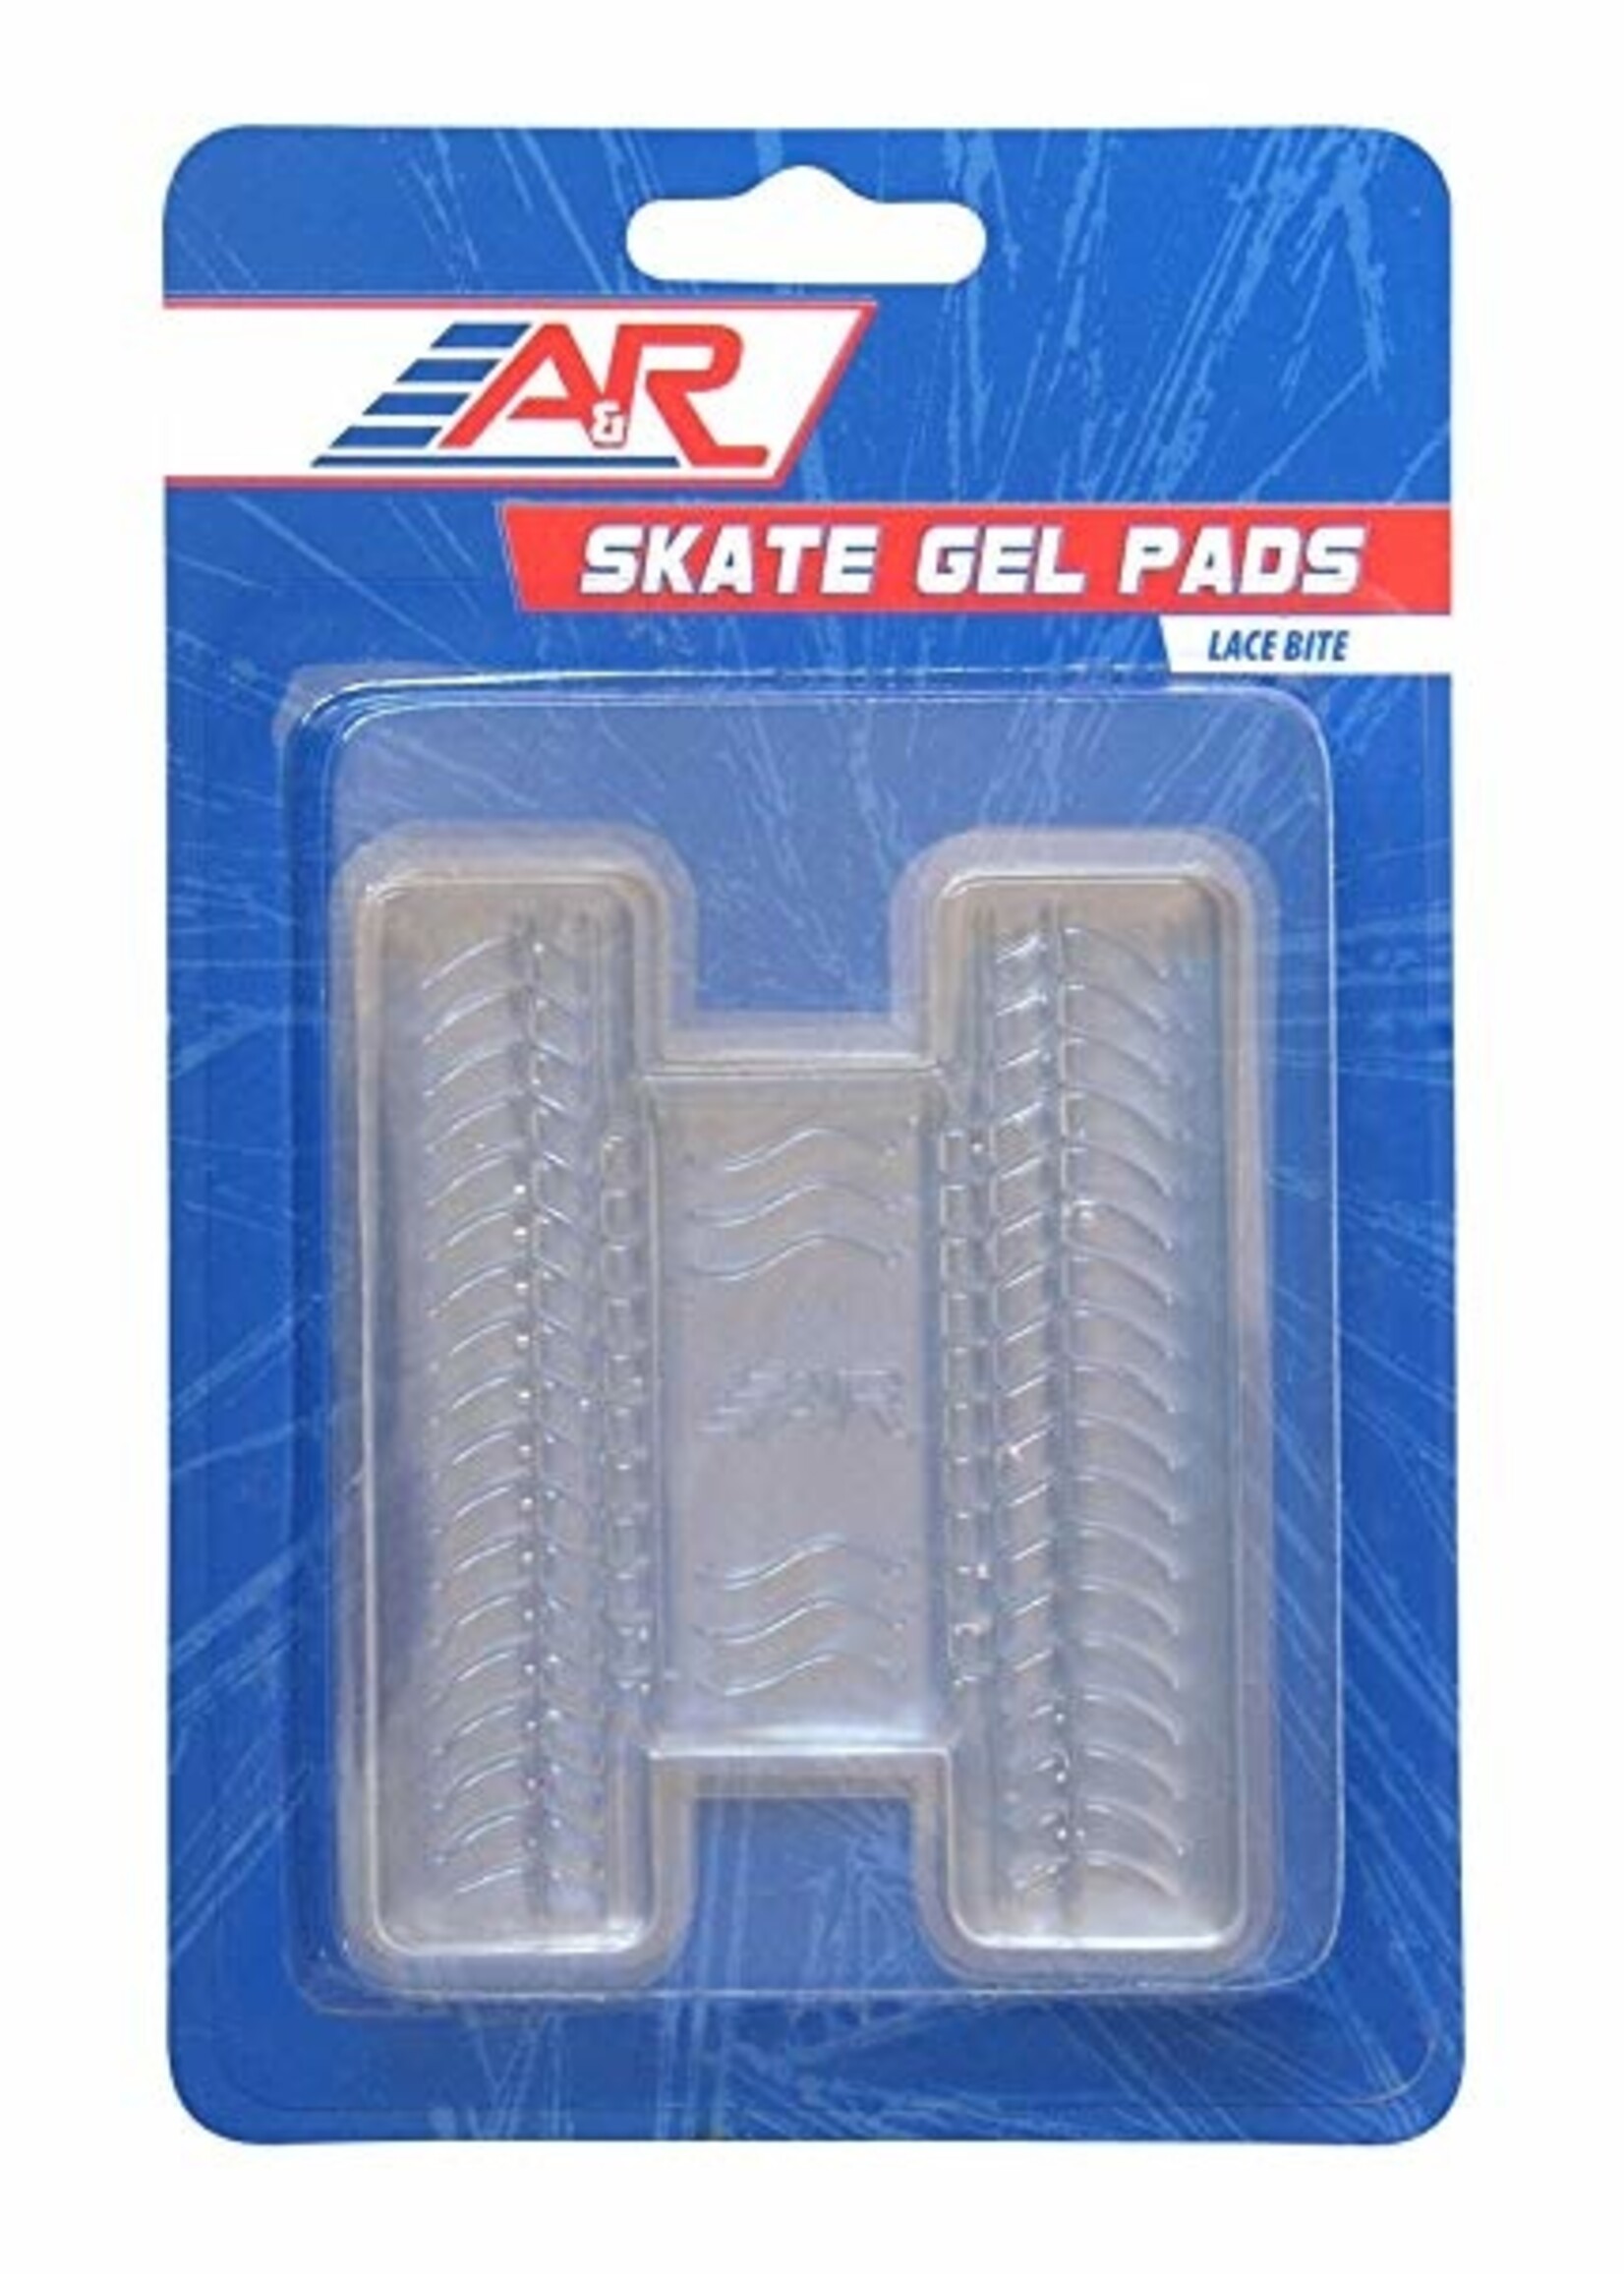 A&R Lace Bite Gel Pad